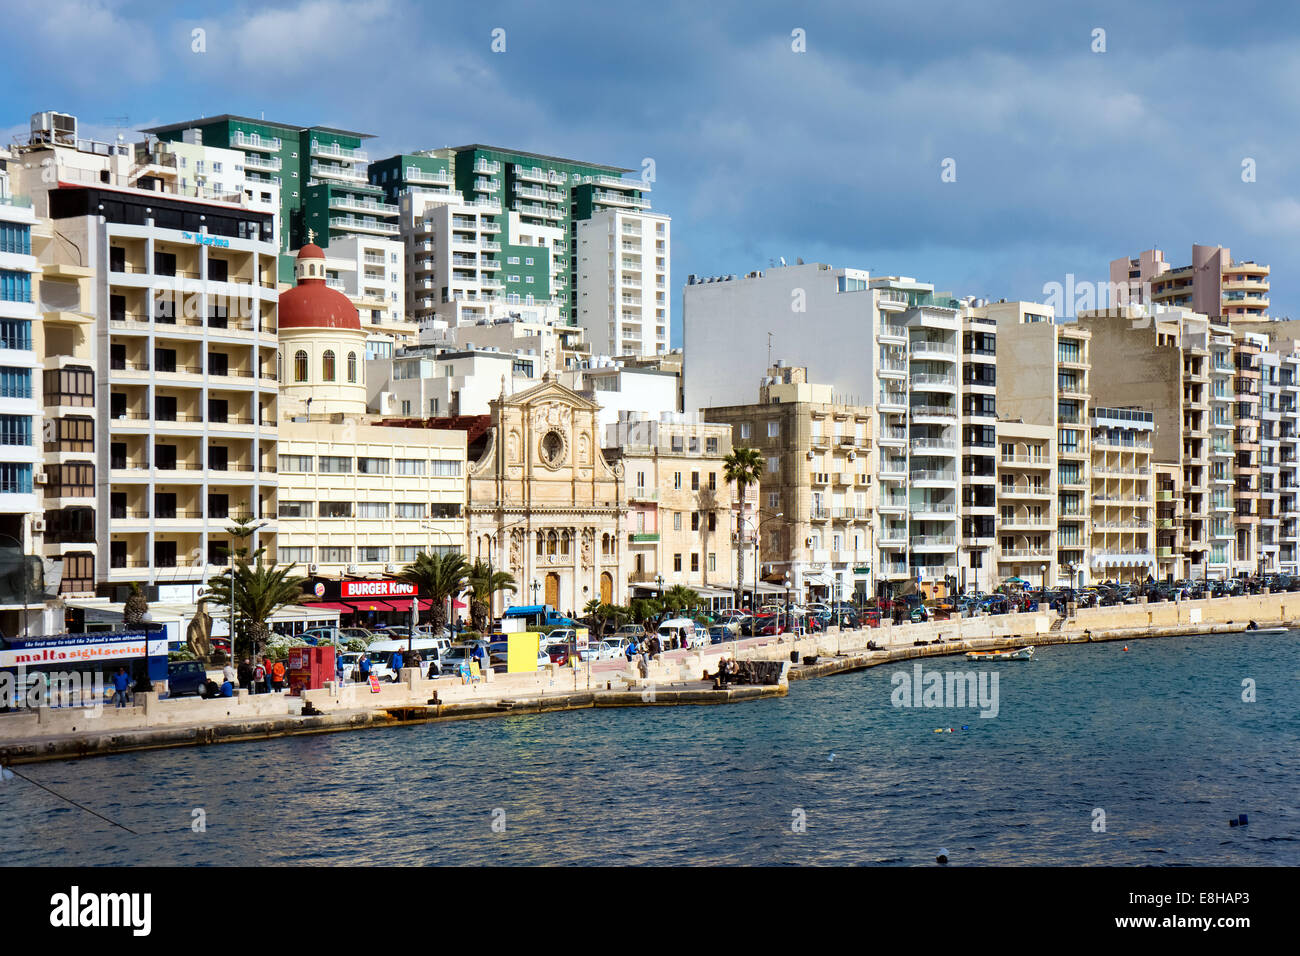 Malta, Sliema, historical building between new buildings at waterfront Stock Photo